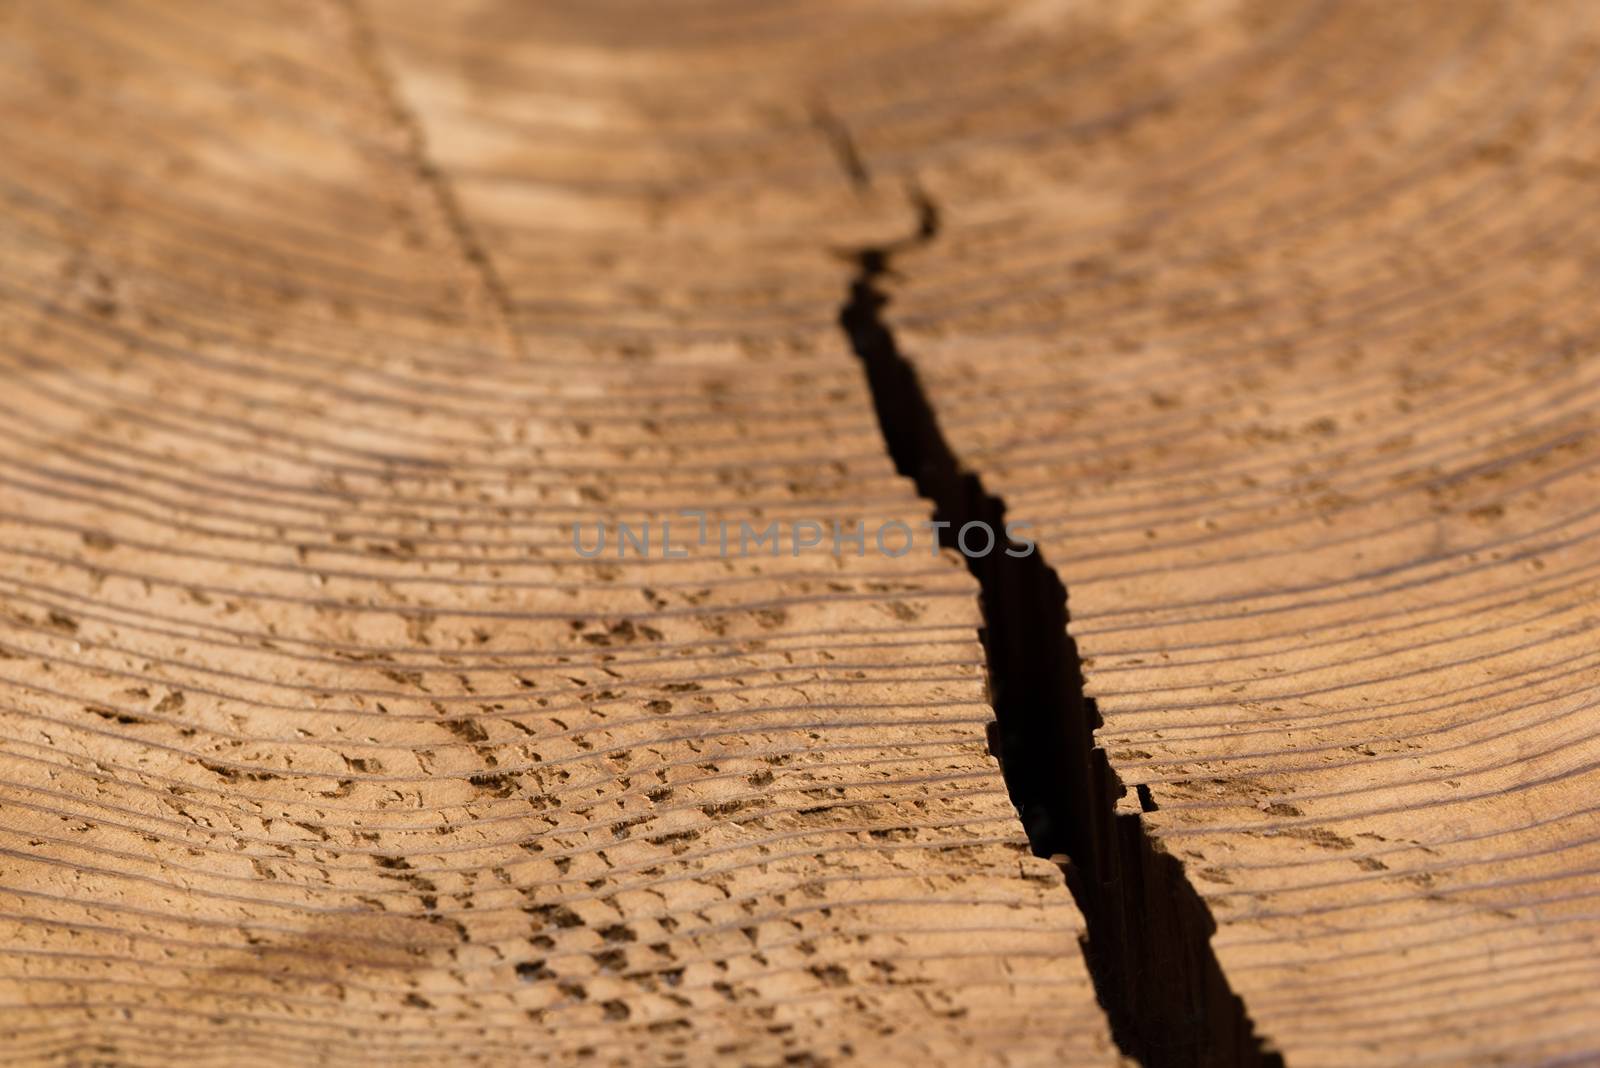 Round Wood Grain in Tree Stump by justtscott